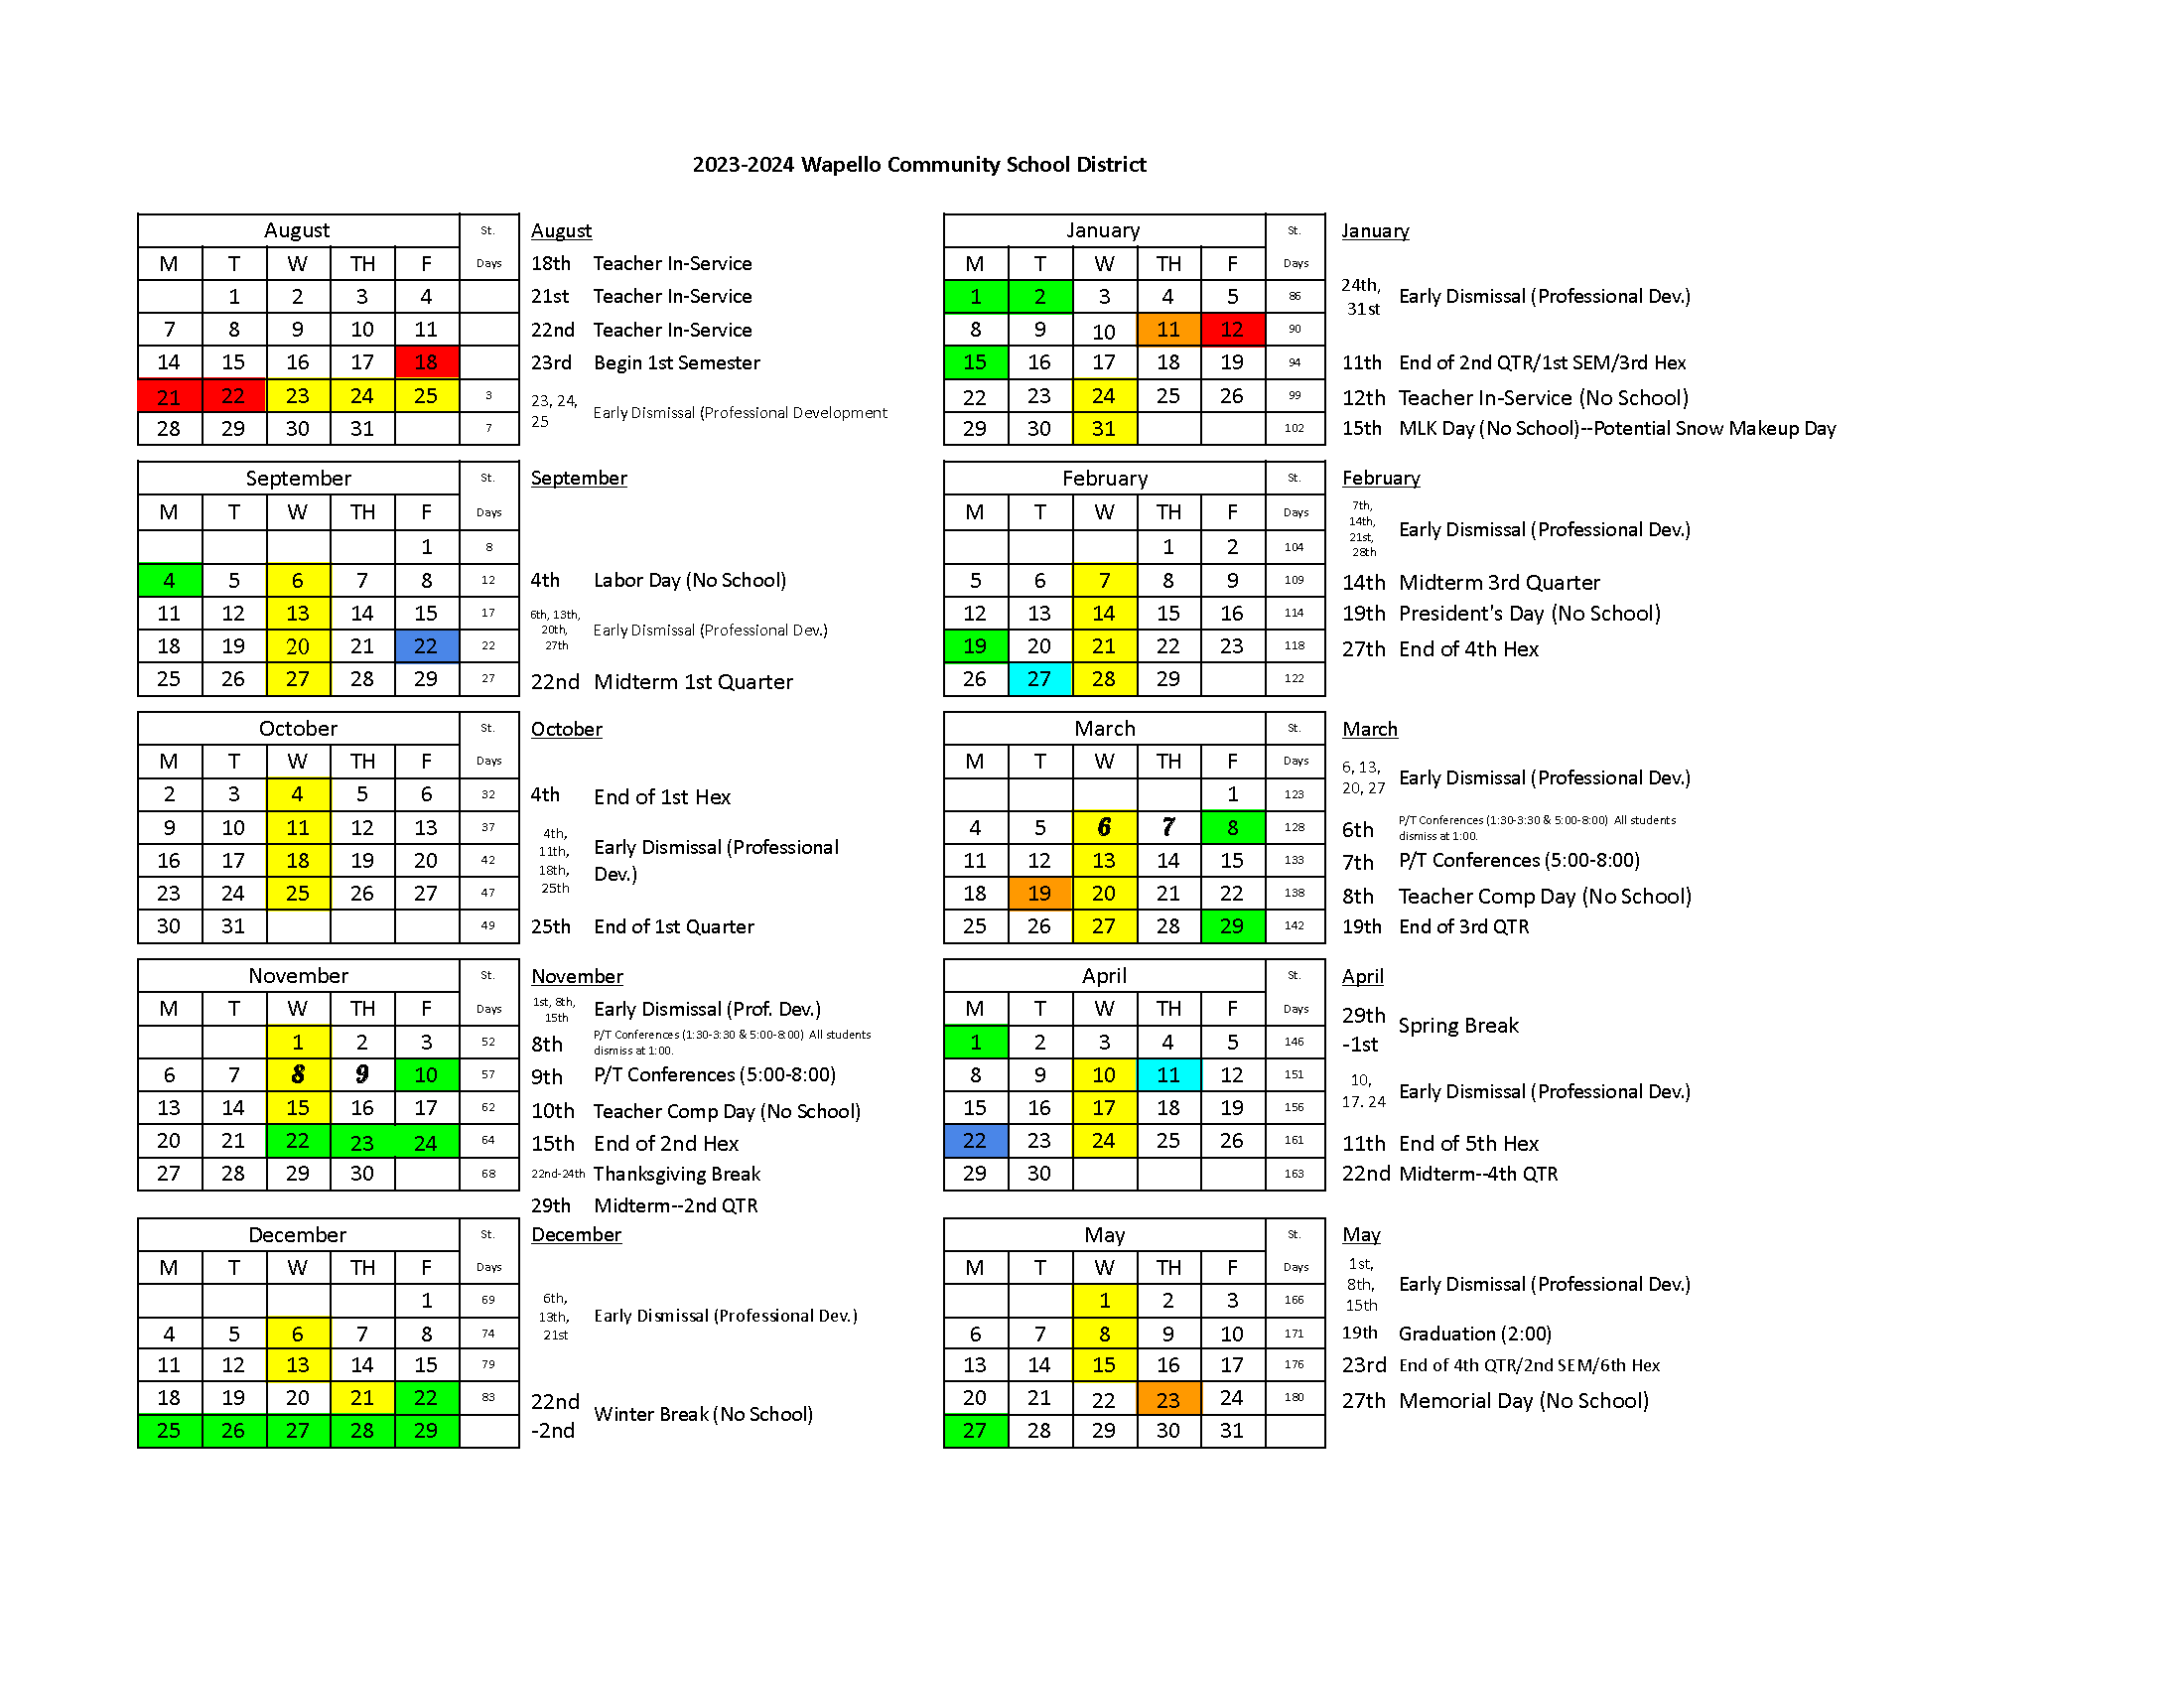 Wapello CSD 2023-2024 Calendar - Draft